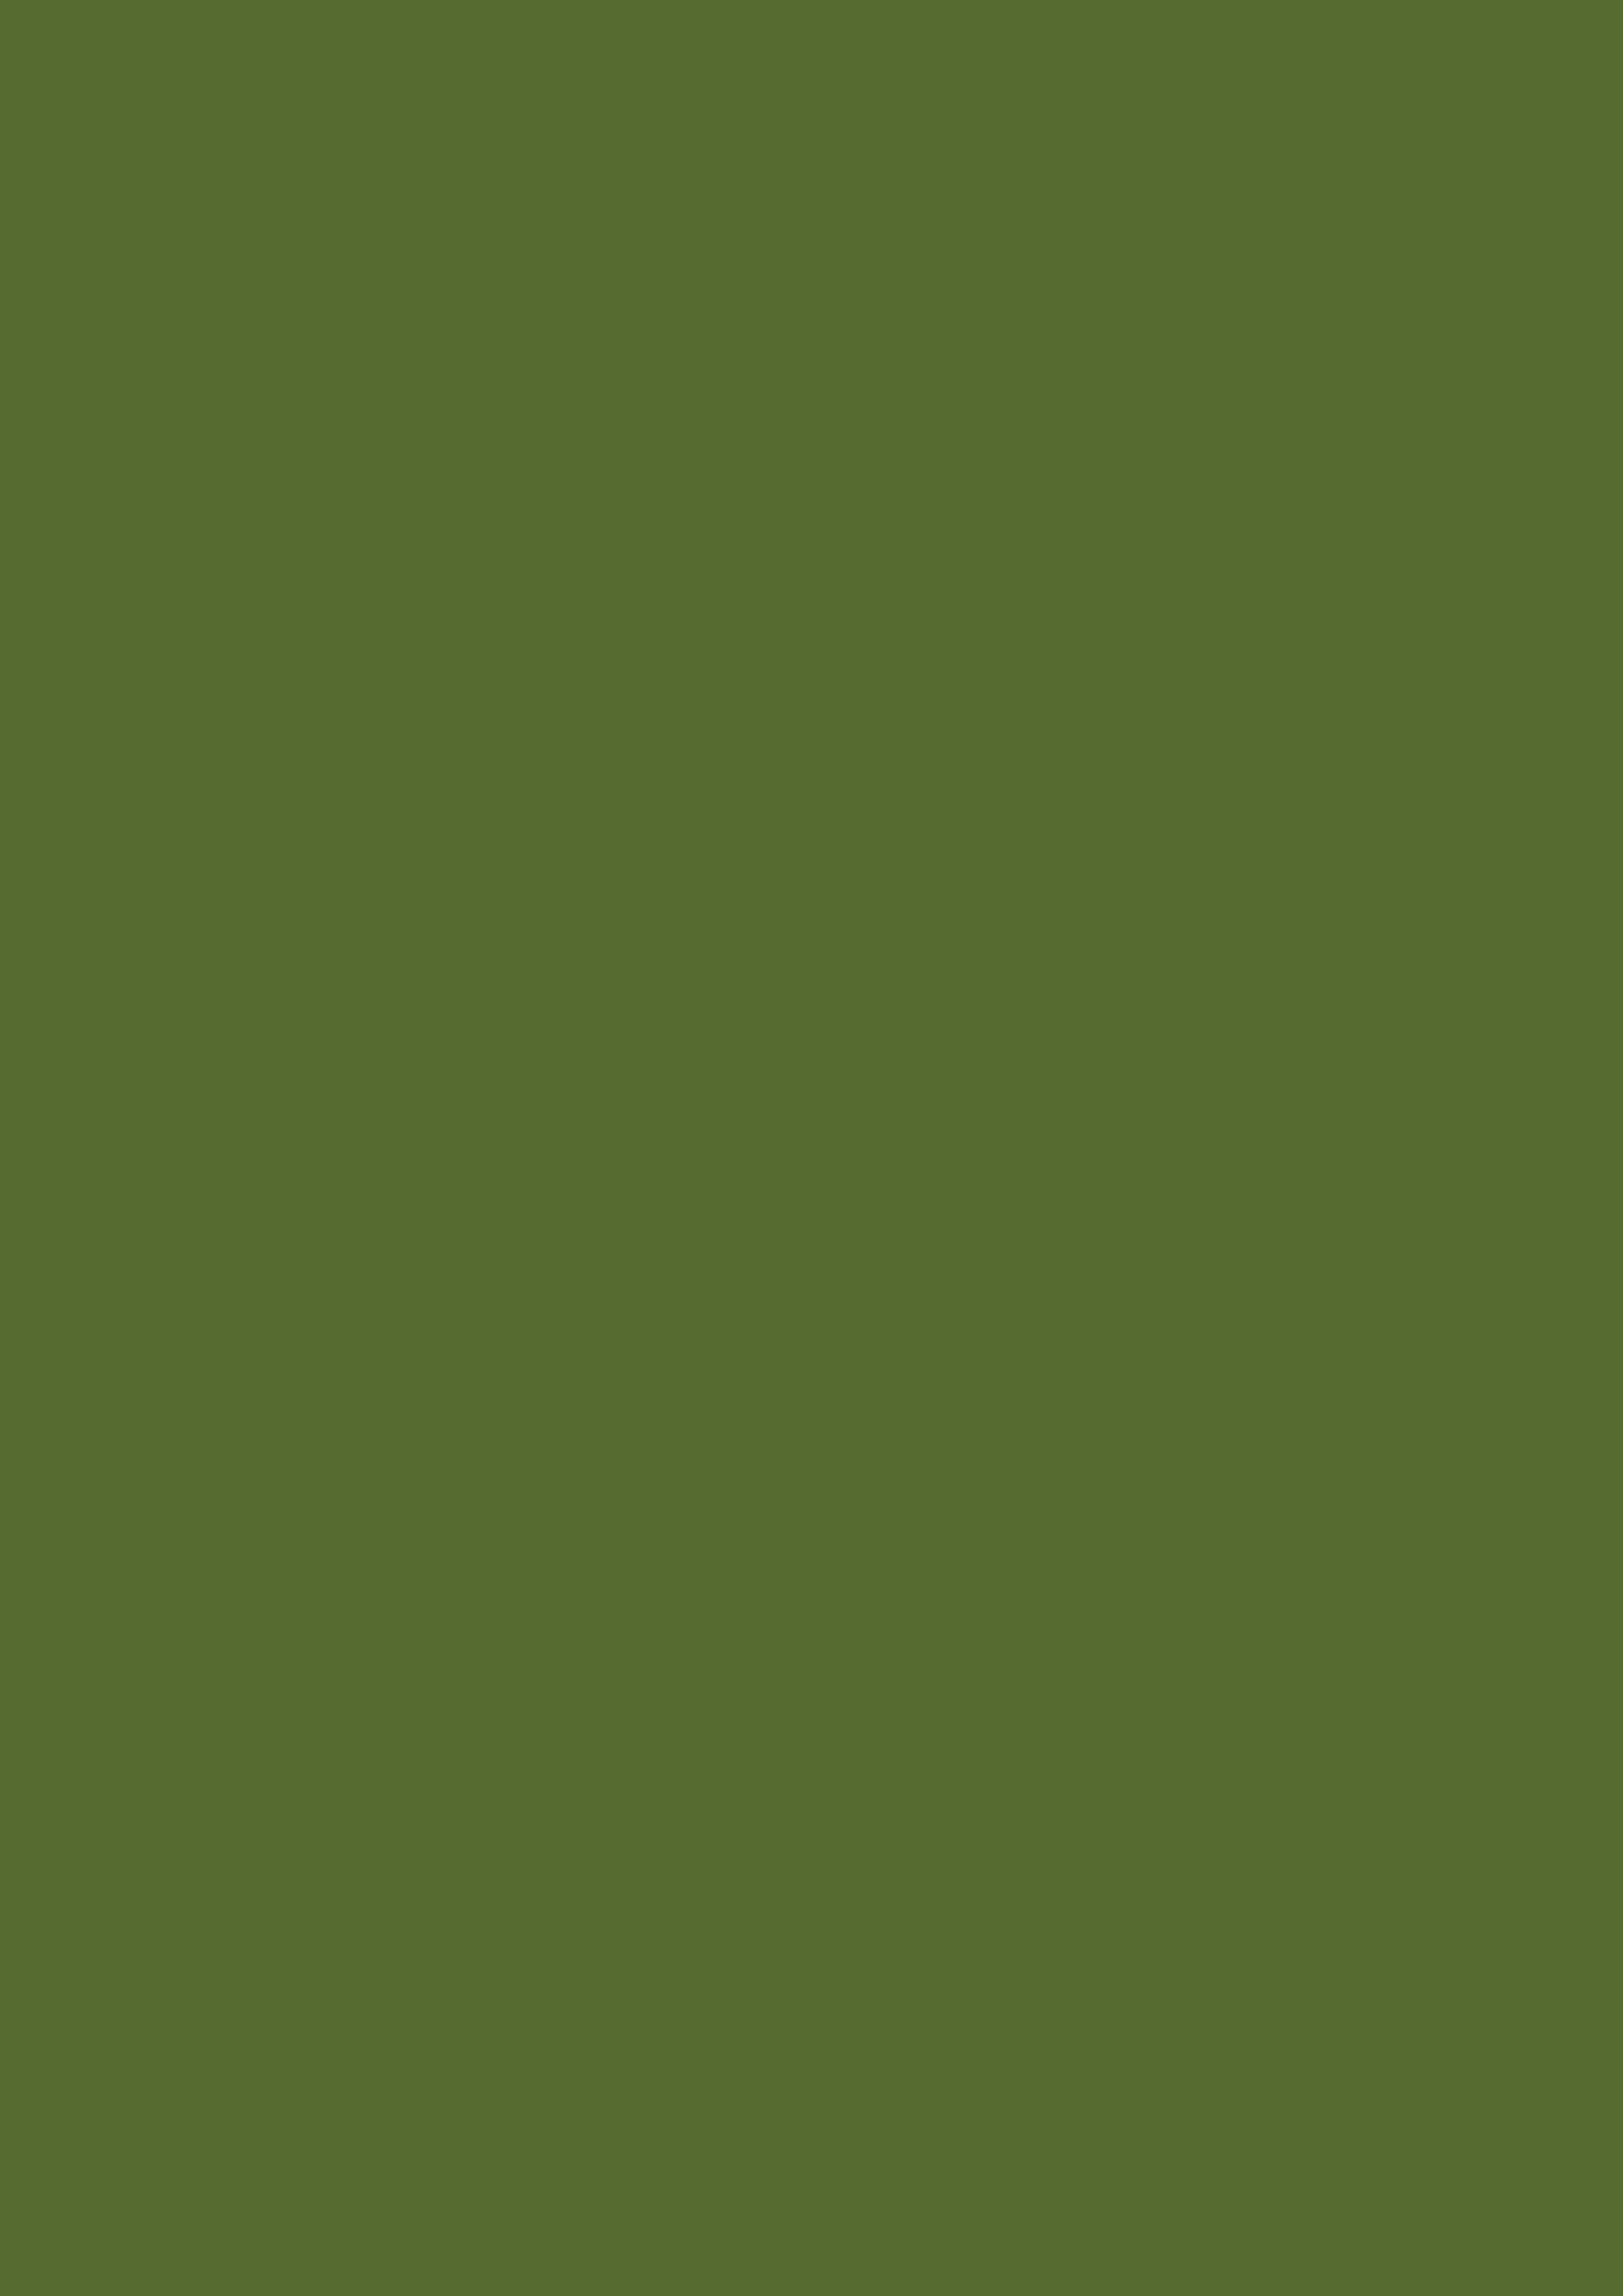 2480x3508 Dark Olive Green Solid Color Background